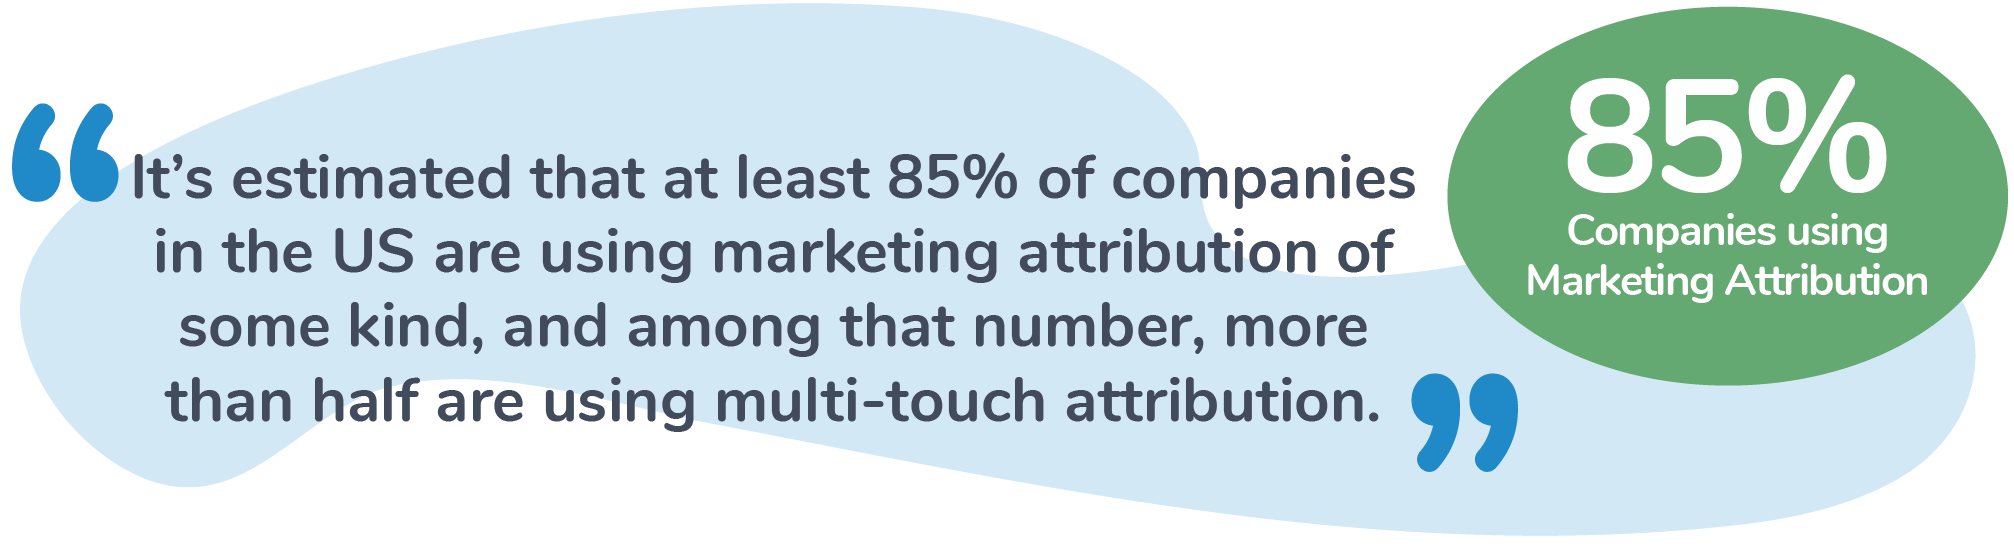 Companies using Marketing Attribution